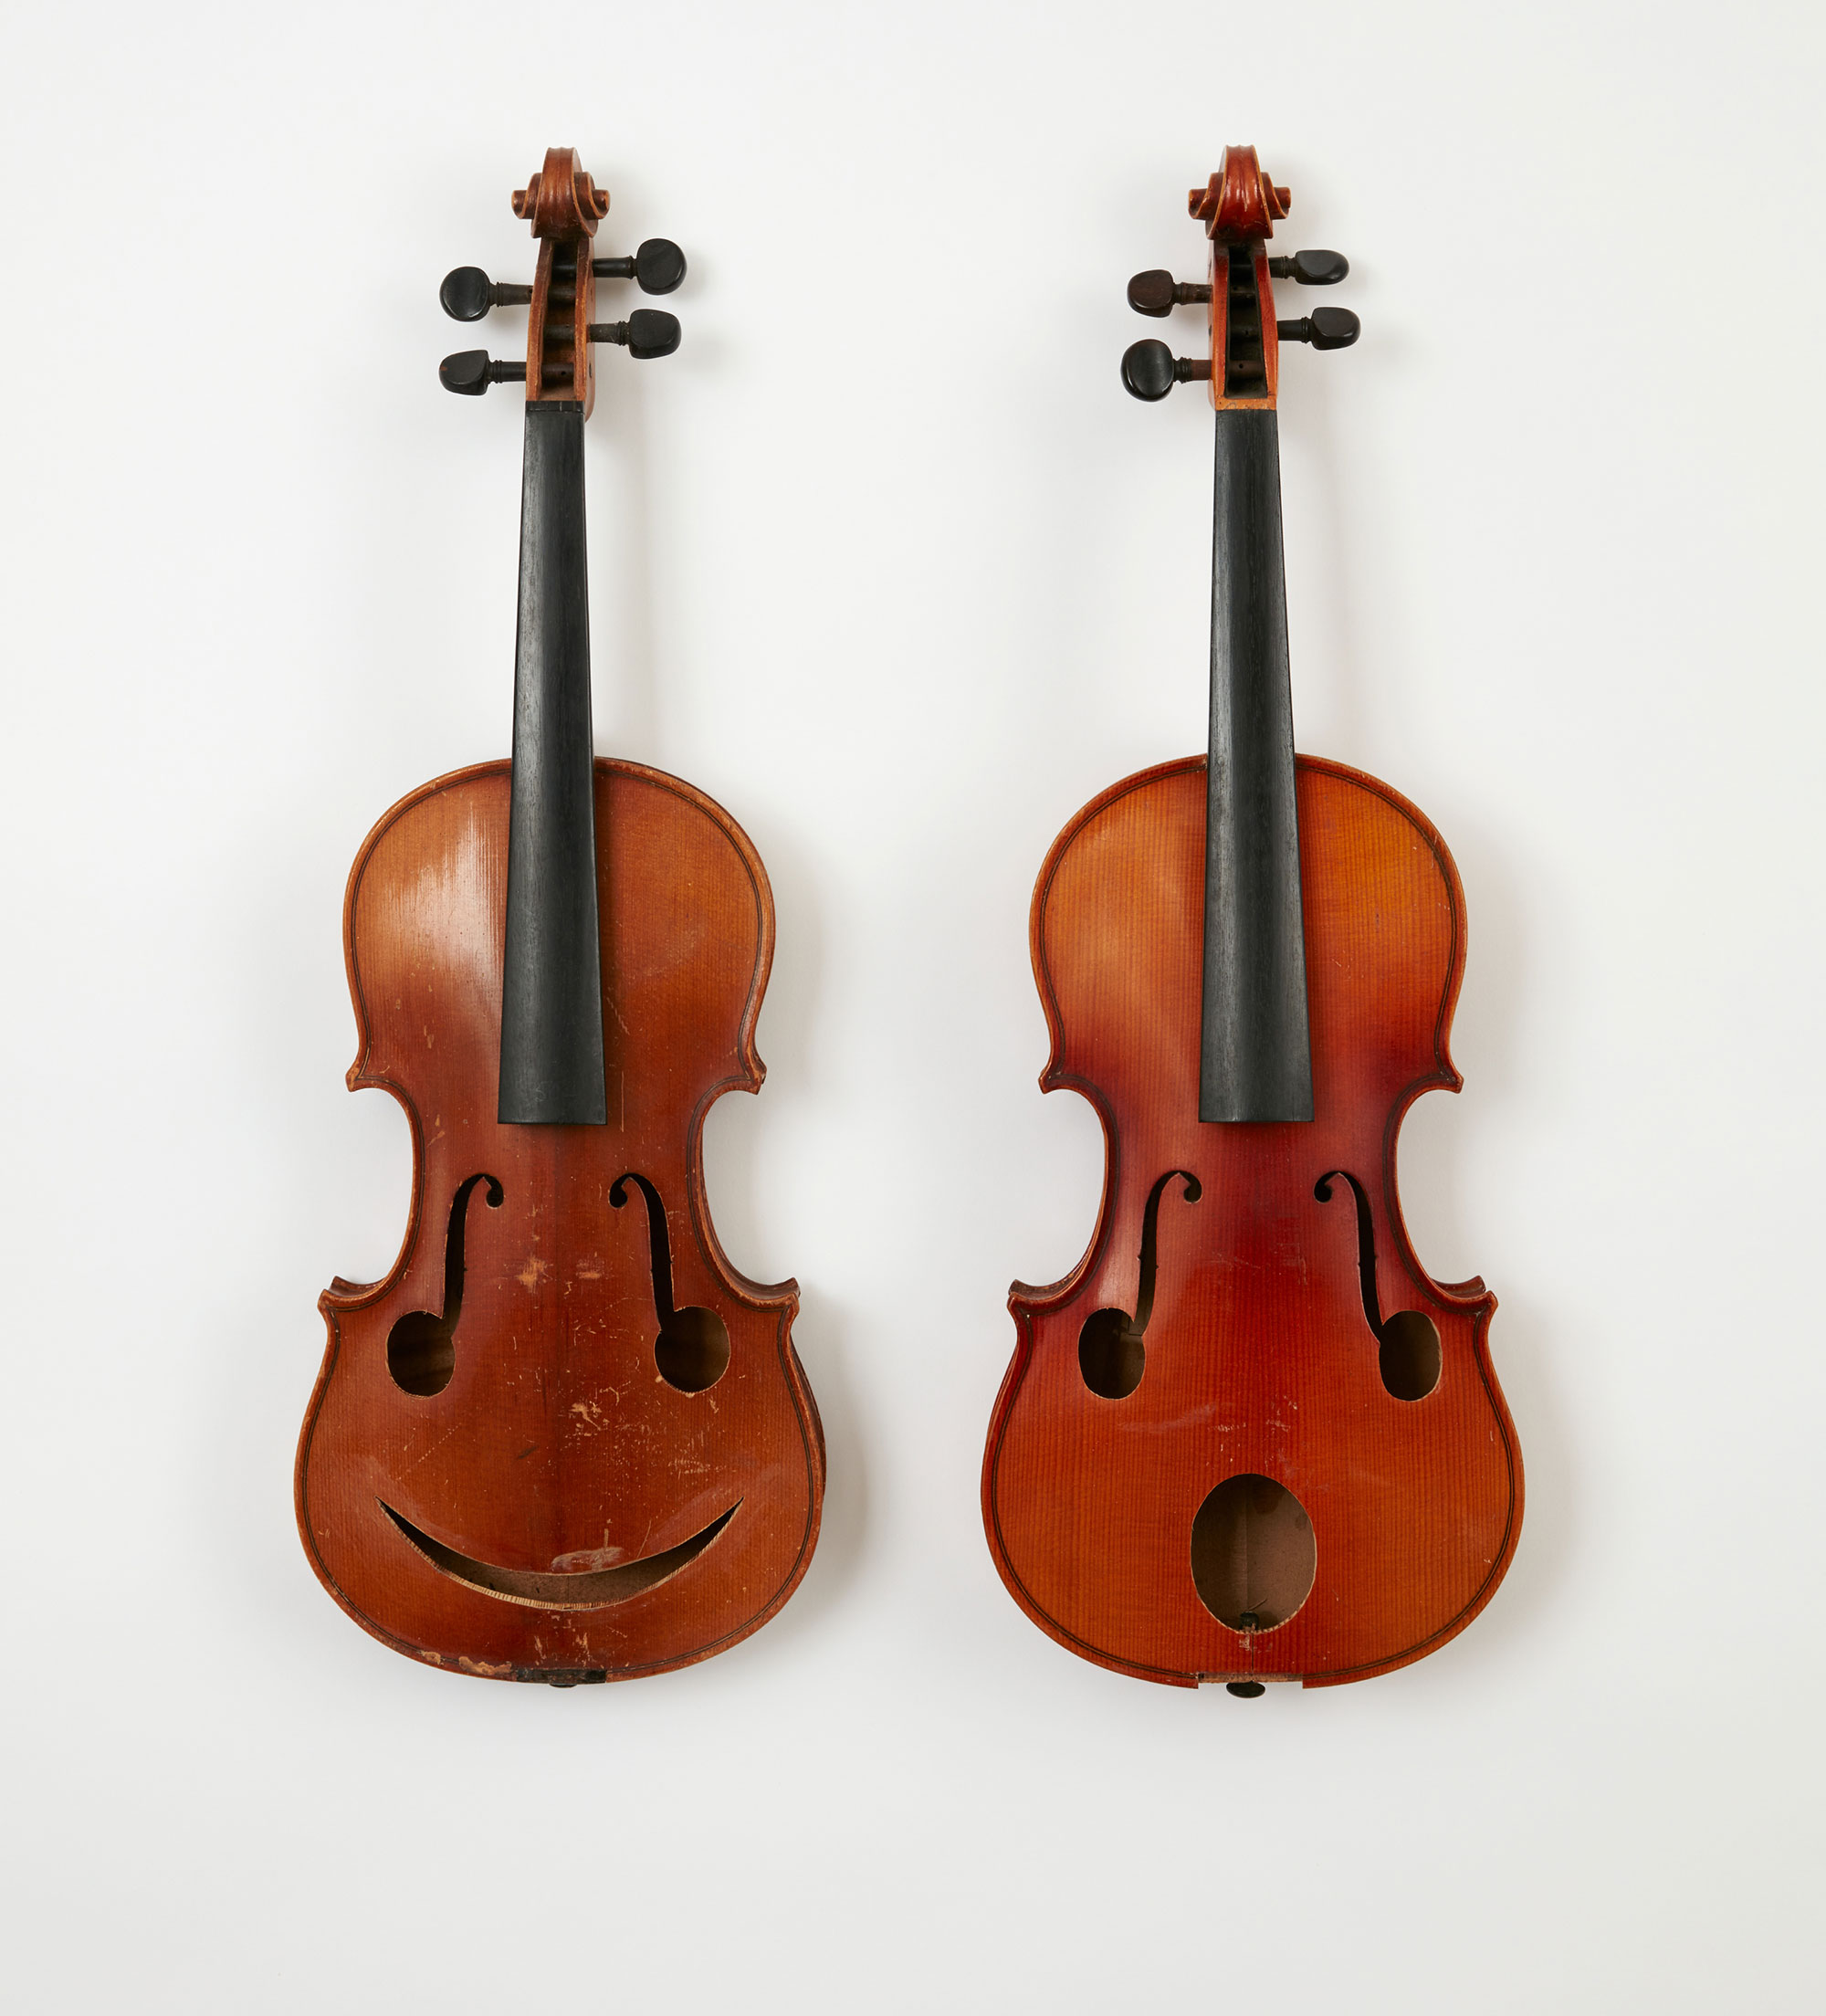 2 violins